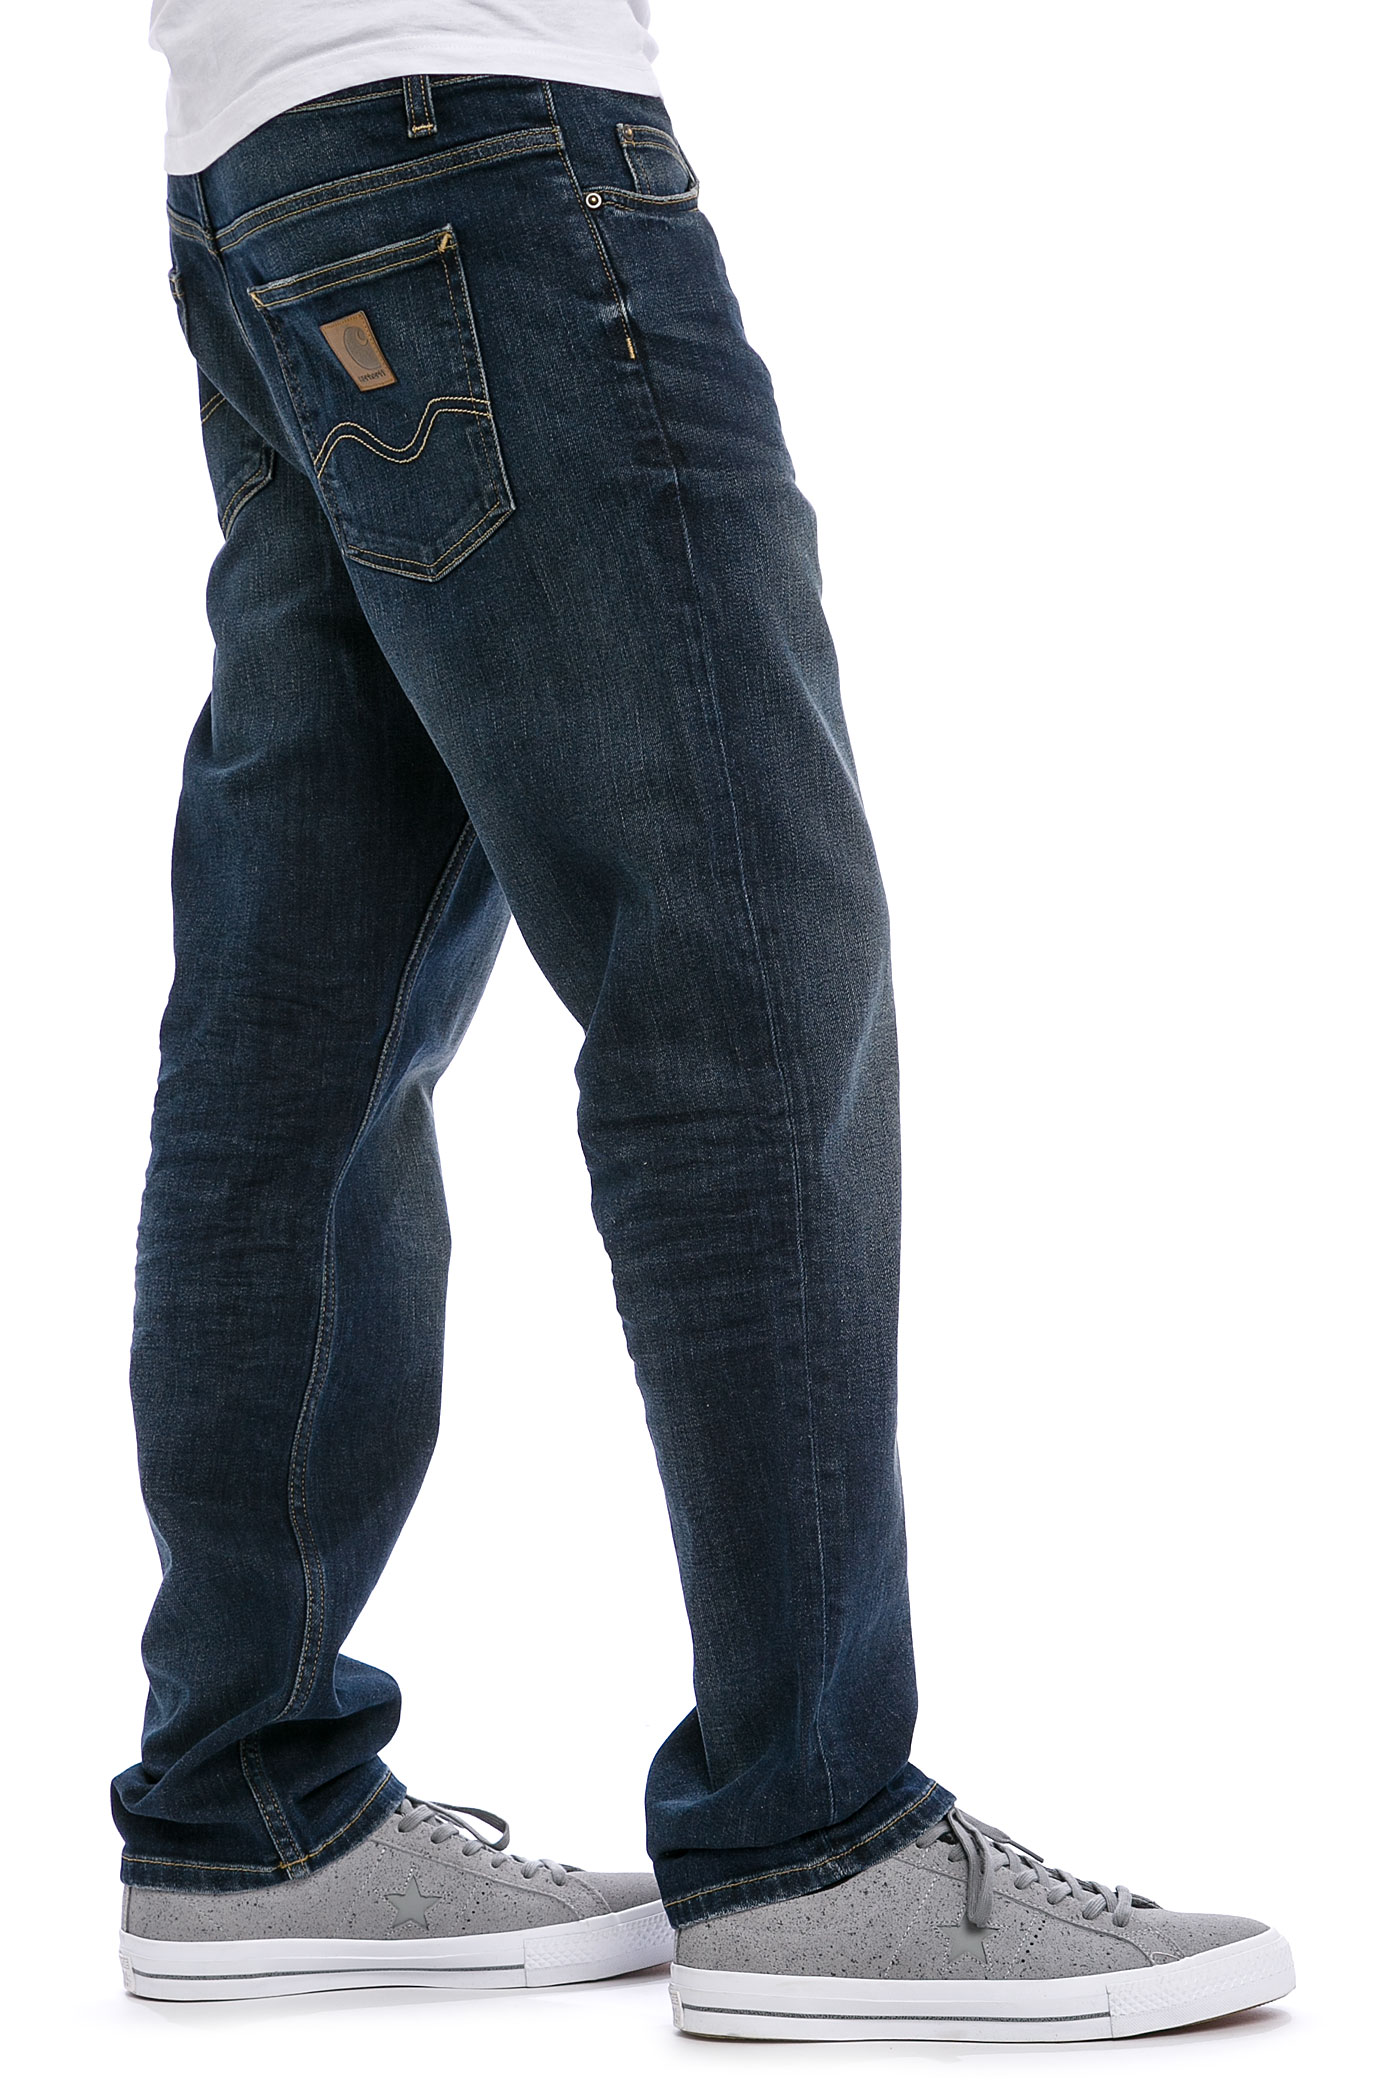 Carhartt WIP Texas Pant Spicer Jeans (blue natural dark wash) buy at ...